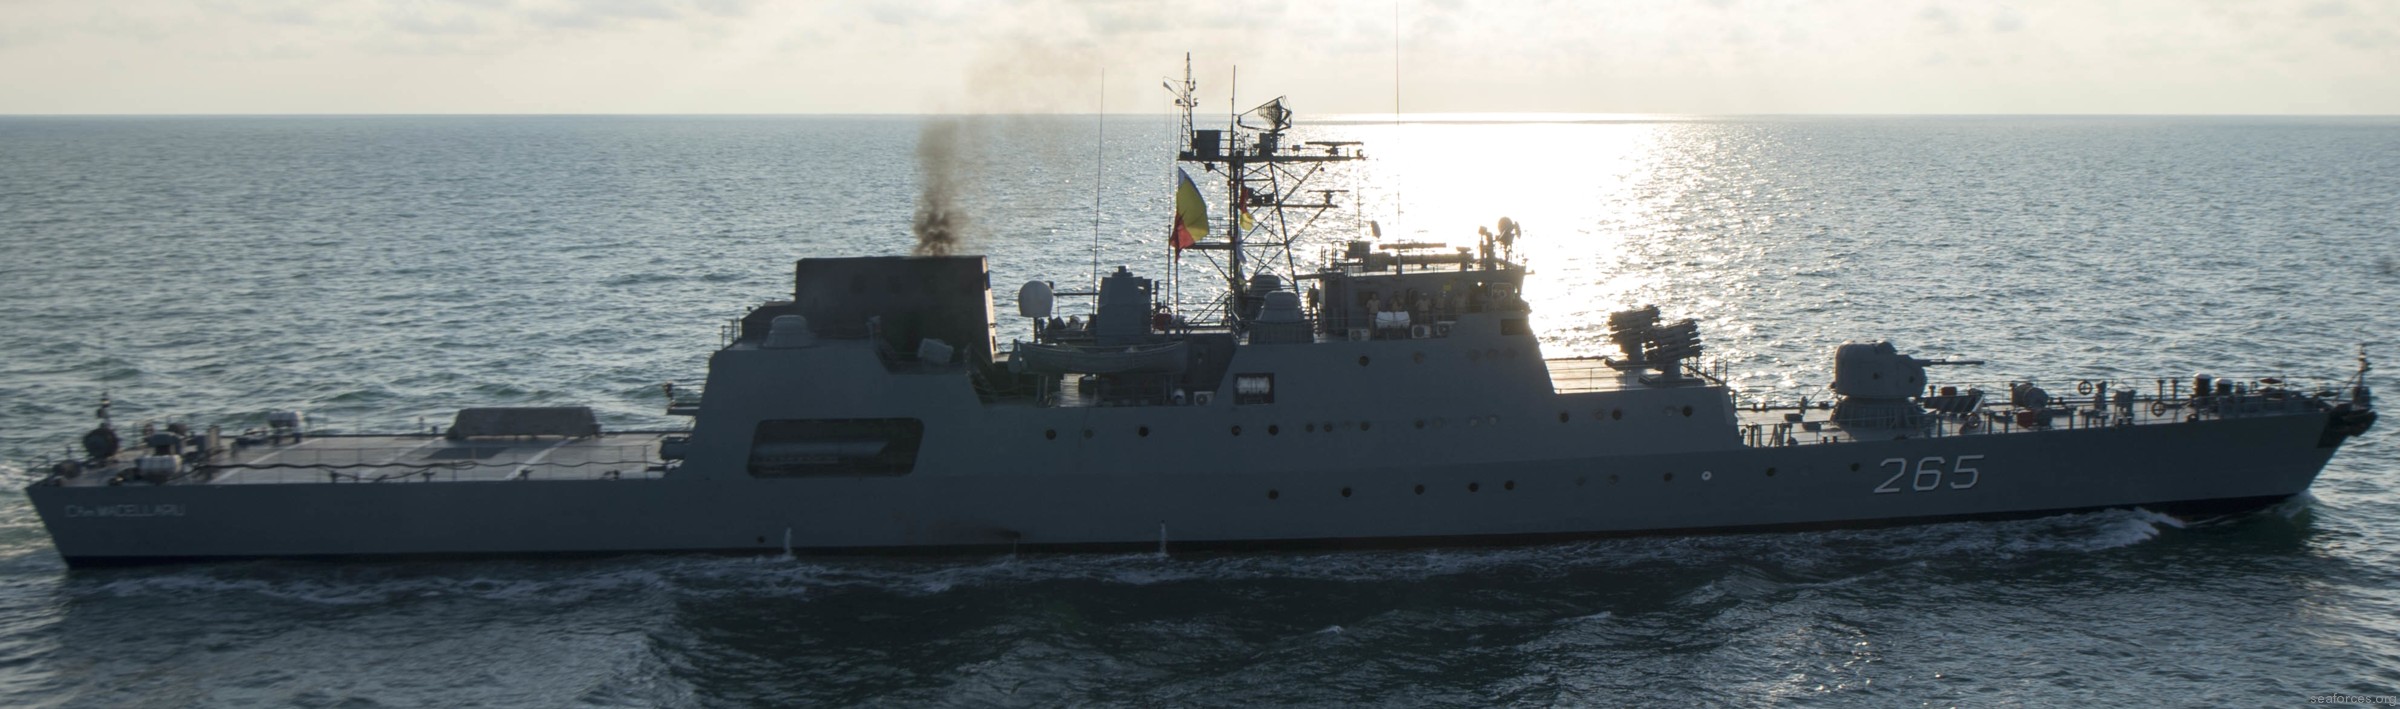 f-265 ros contraamiral horia macellariu tetal-ii class corvette romanian navy 15